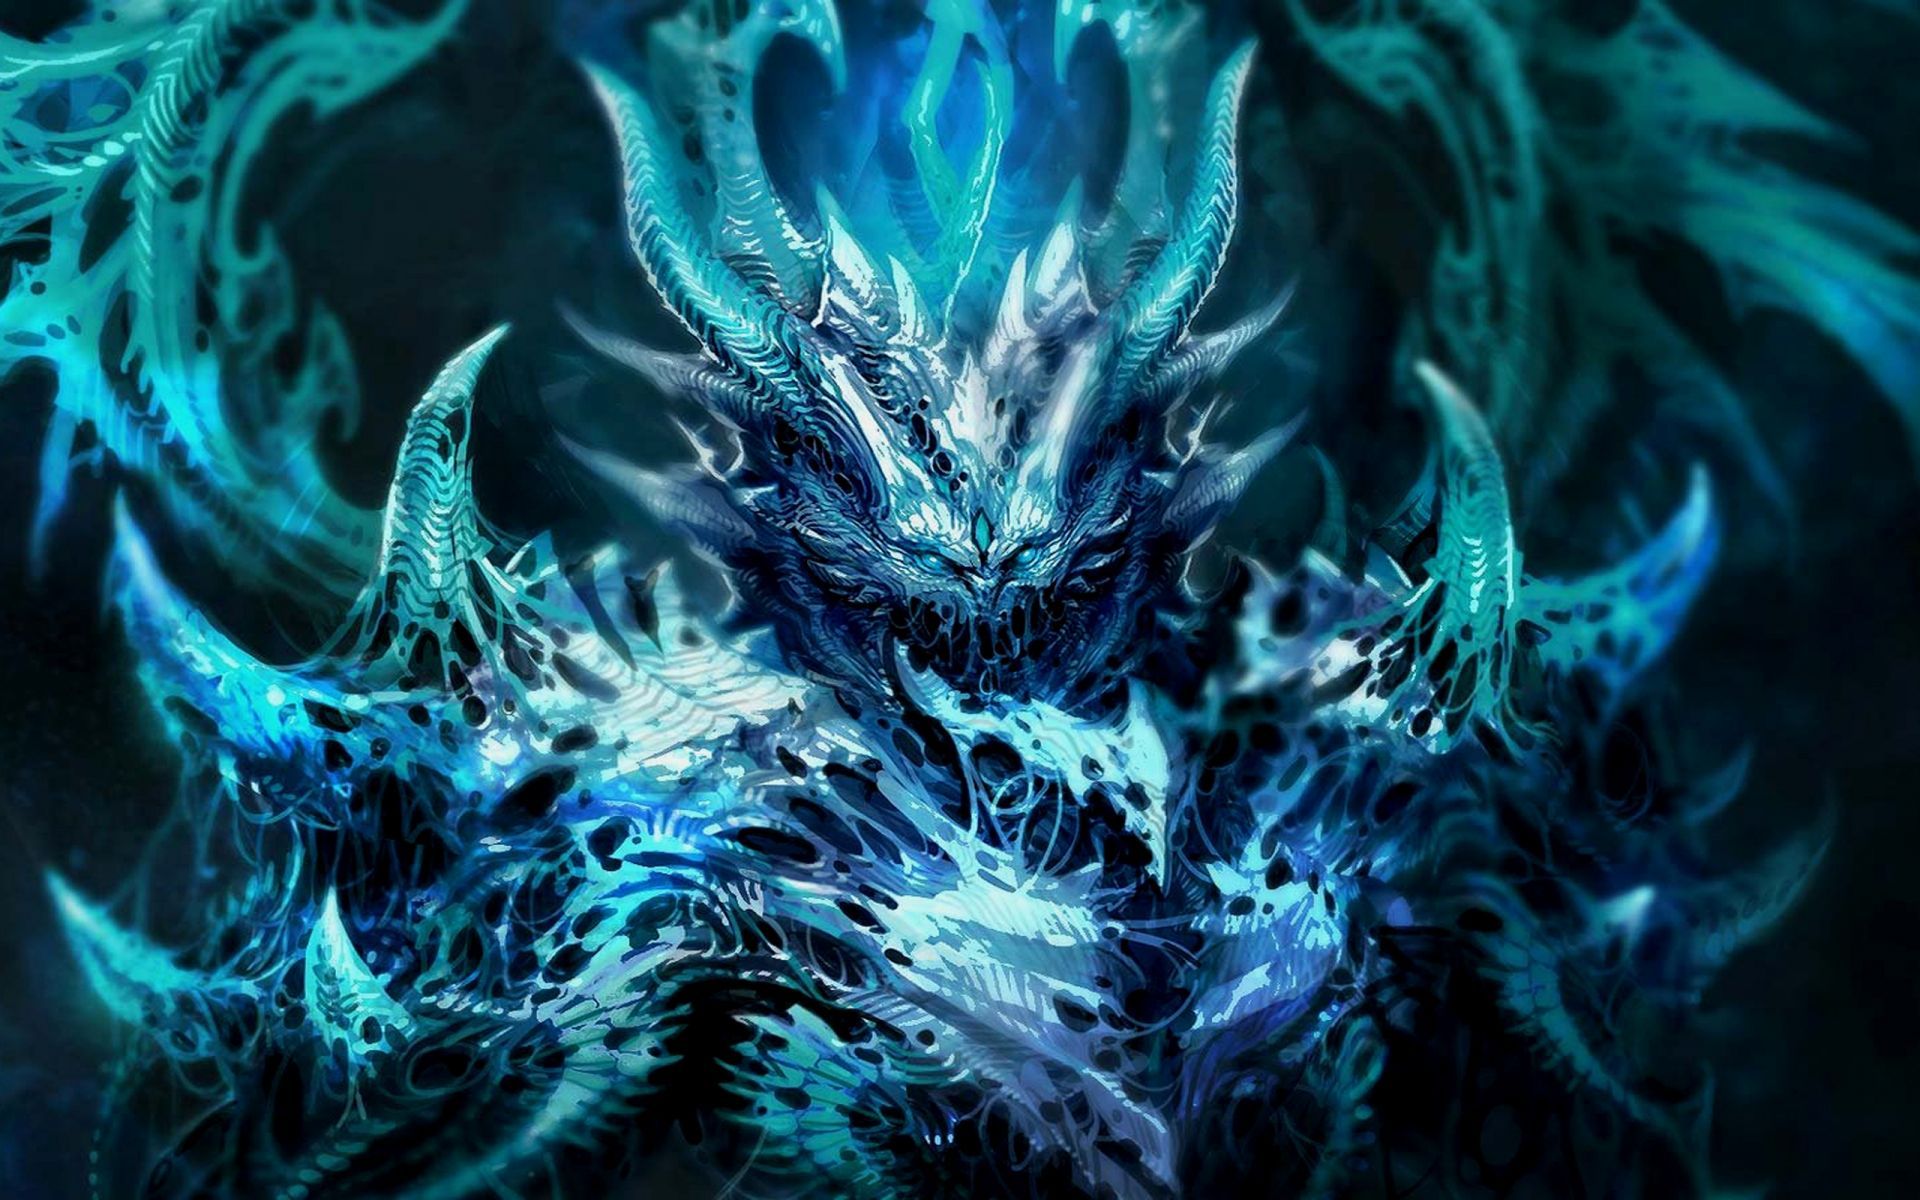 Dark fantasy demon satan angel monster creature 3D magic horns blue art evil wallpaperx1200. Wall. Dragon wallpaper, Evil wallpaper, Fantasy demon